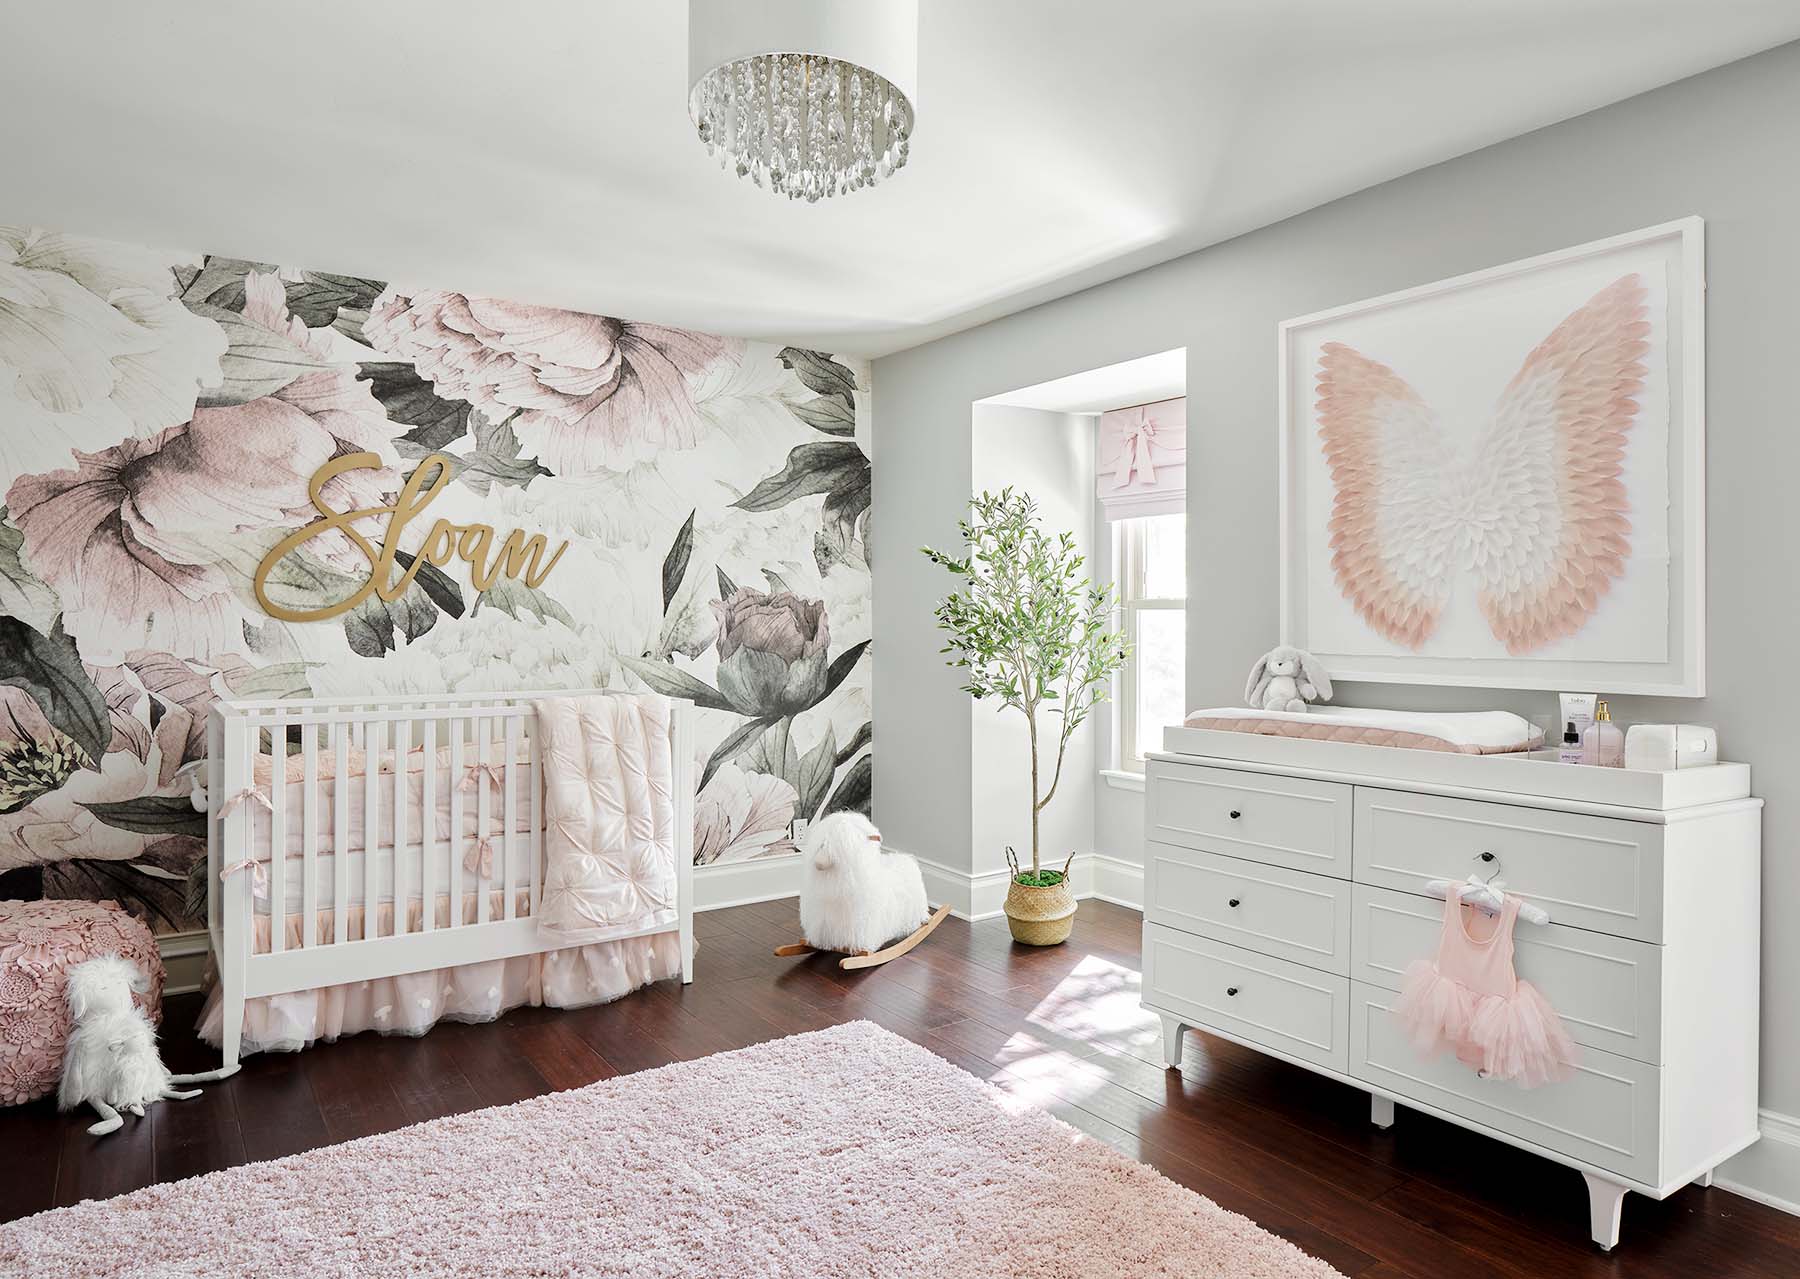 floral-wallpaper-mural-installation-in-baby-girl-nursery-paper-moon-painting-wallpaper-installer-alamo-heights-tx